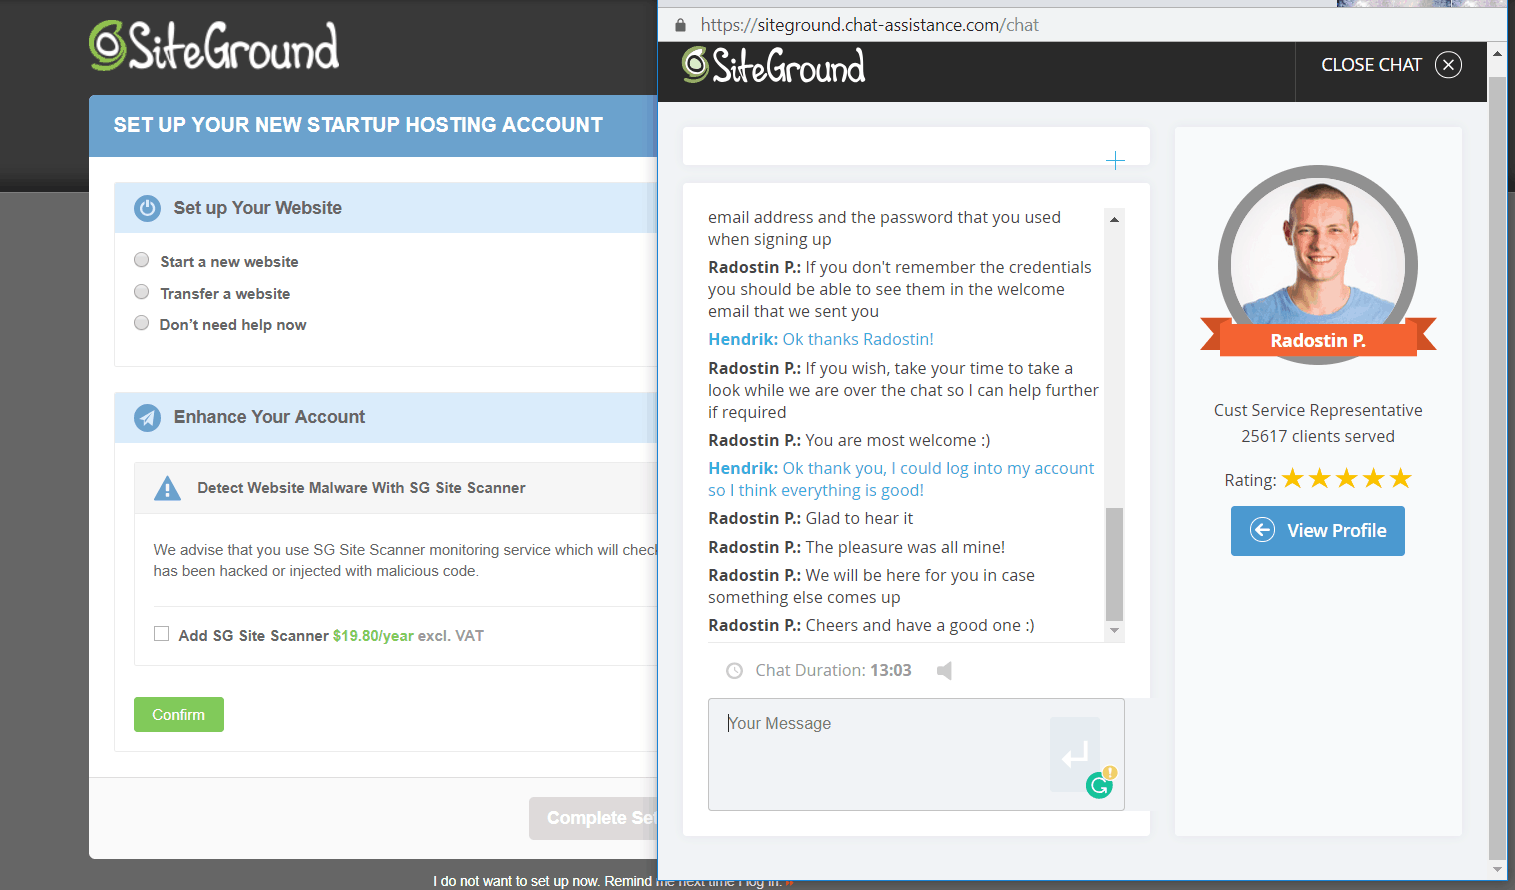 screenshot assistenza via chat con siteground